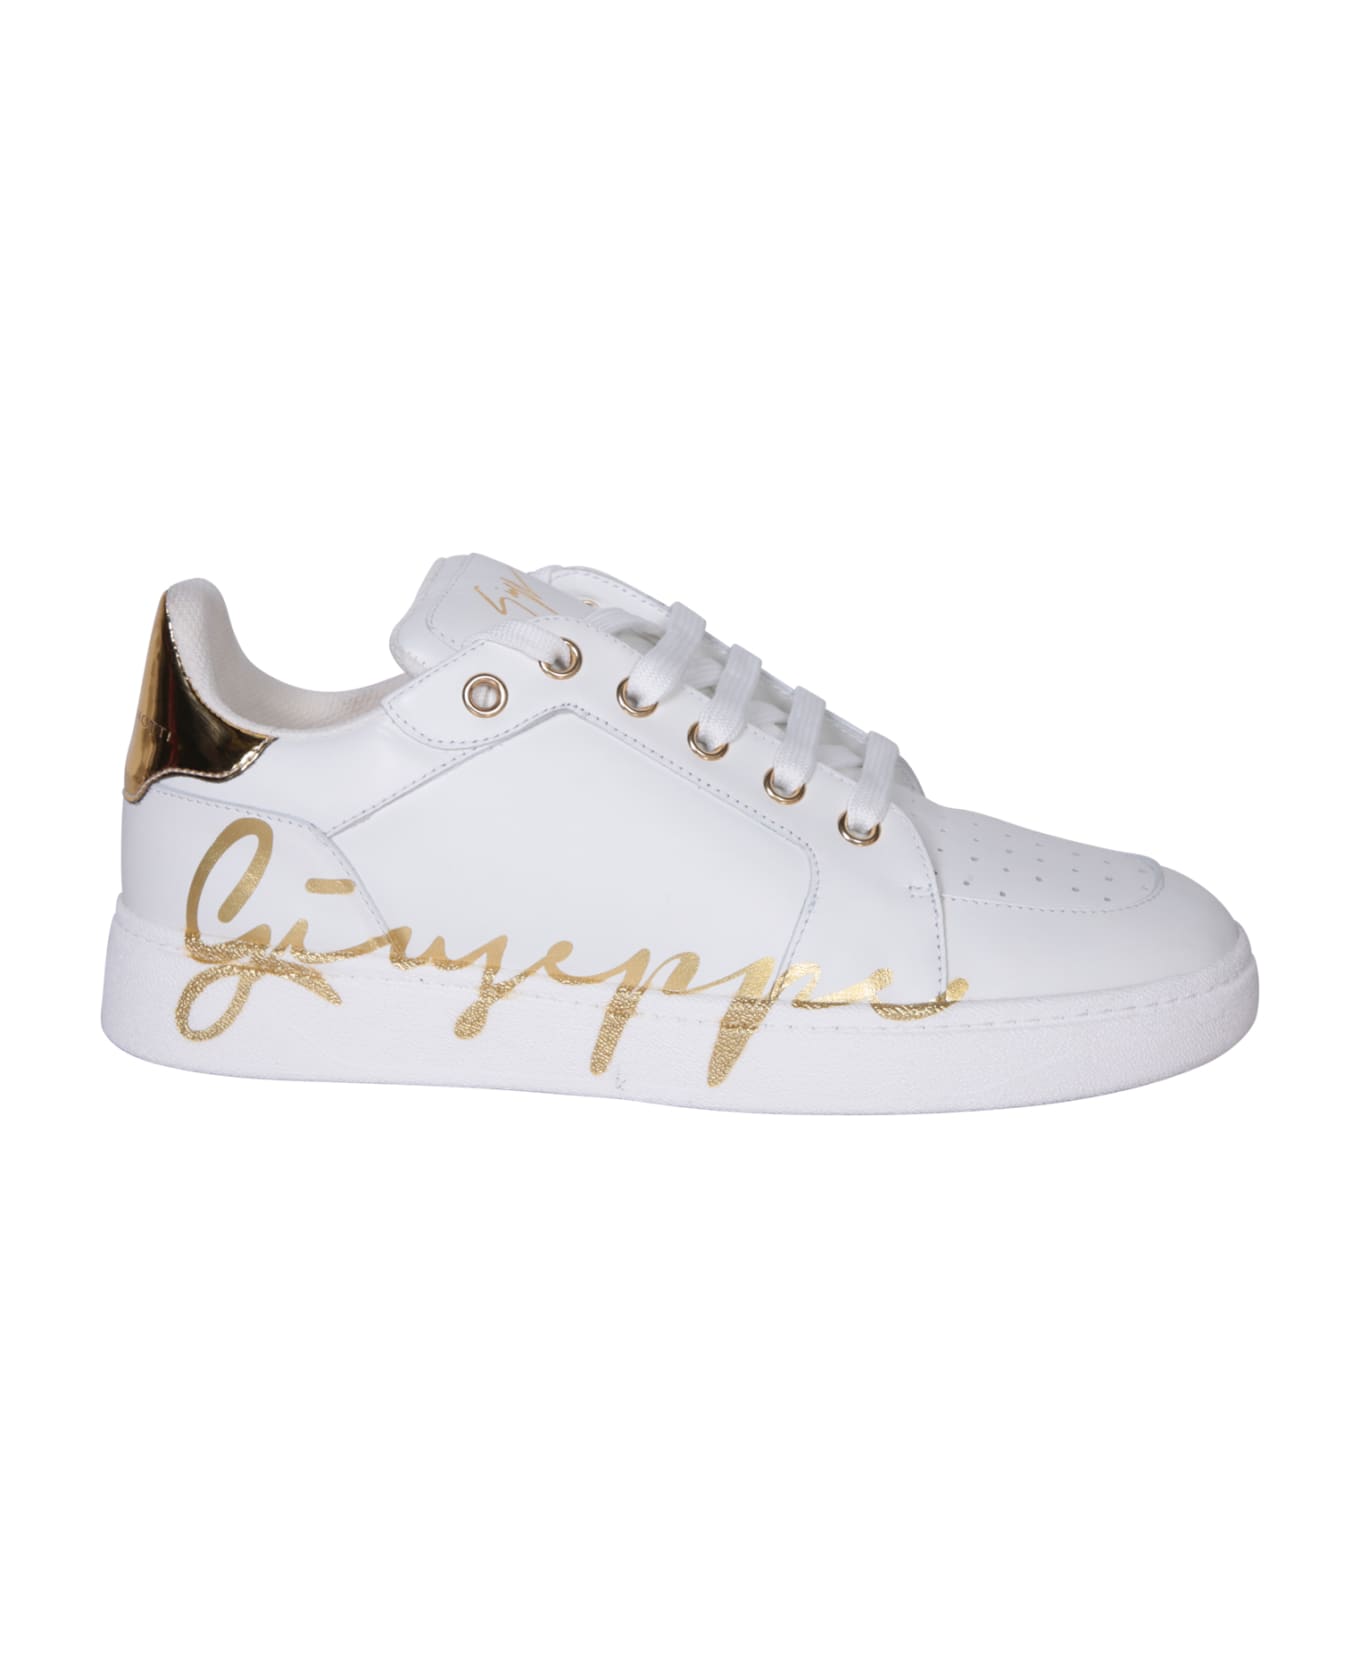 Giuseppe Zanotti Gz94 Black/gold Sneakers - White